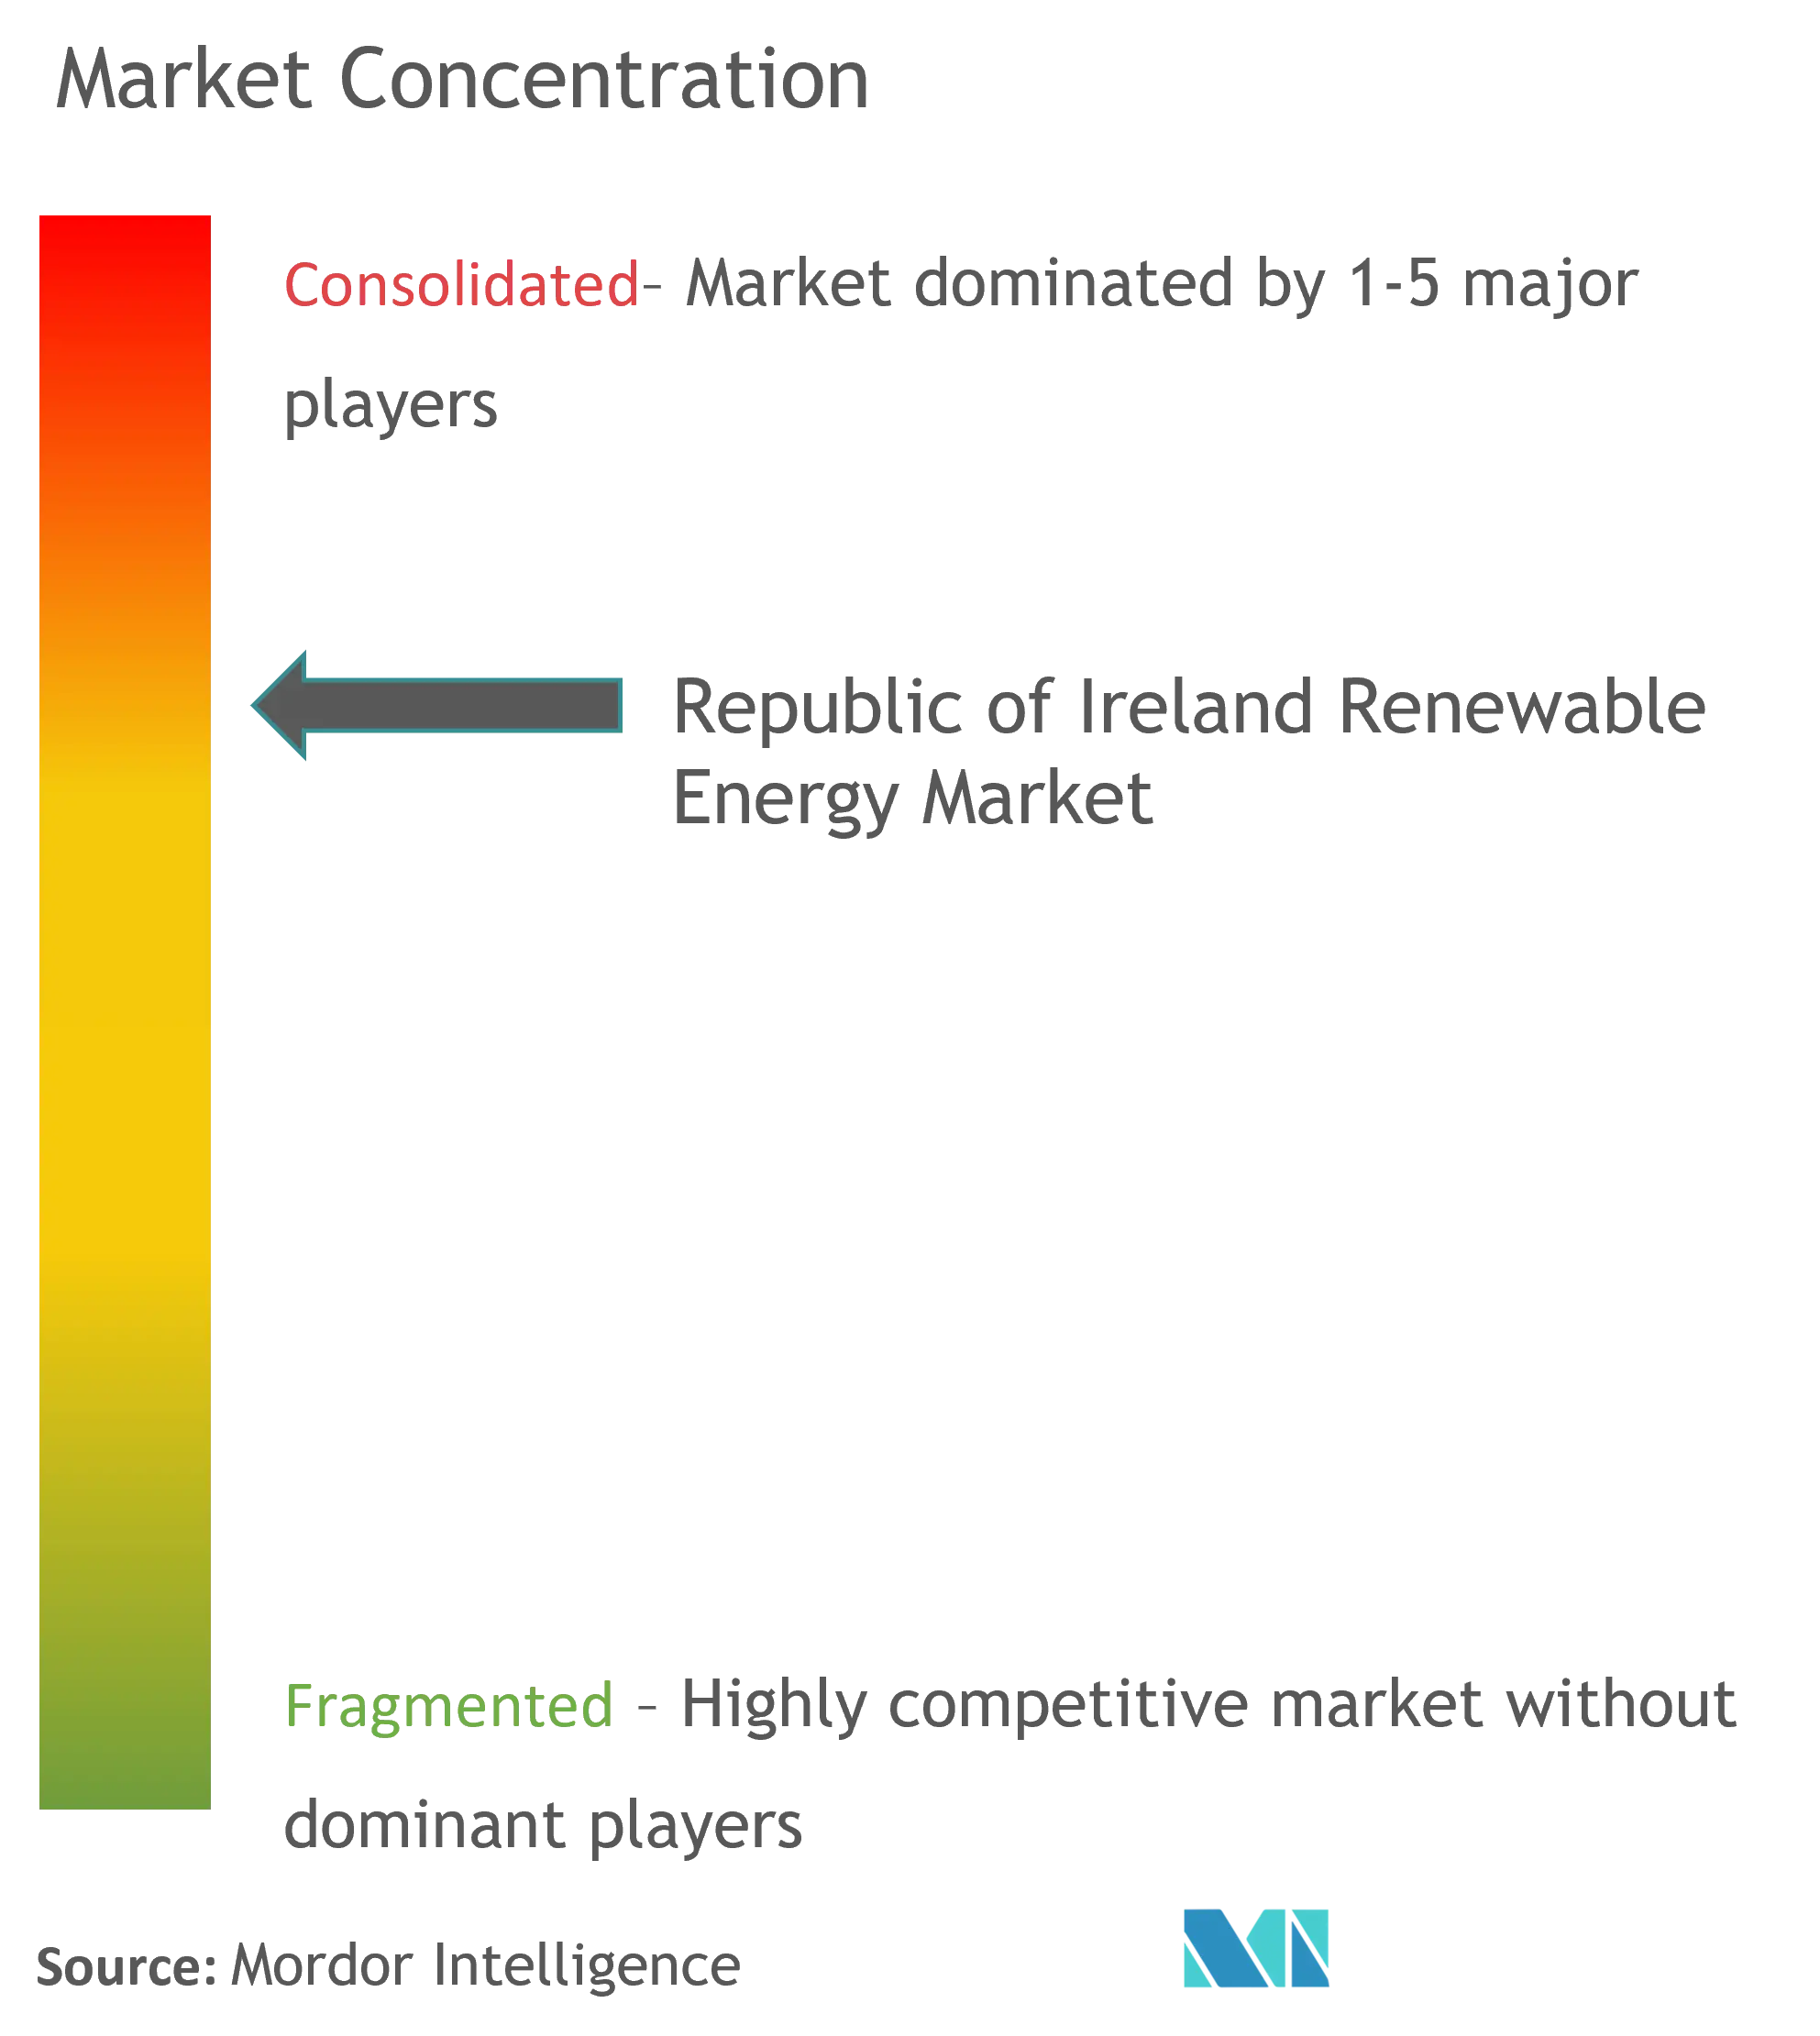 Republic of Ireland Renewable Energy Market Concentration